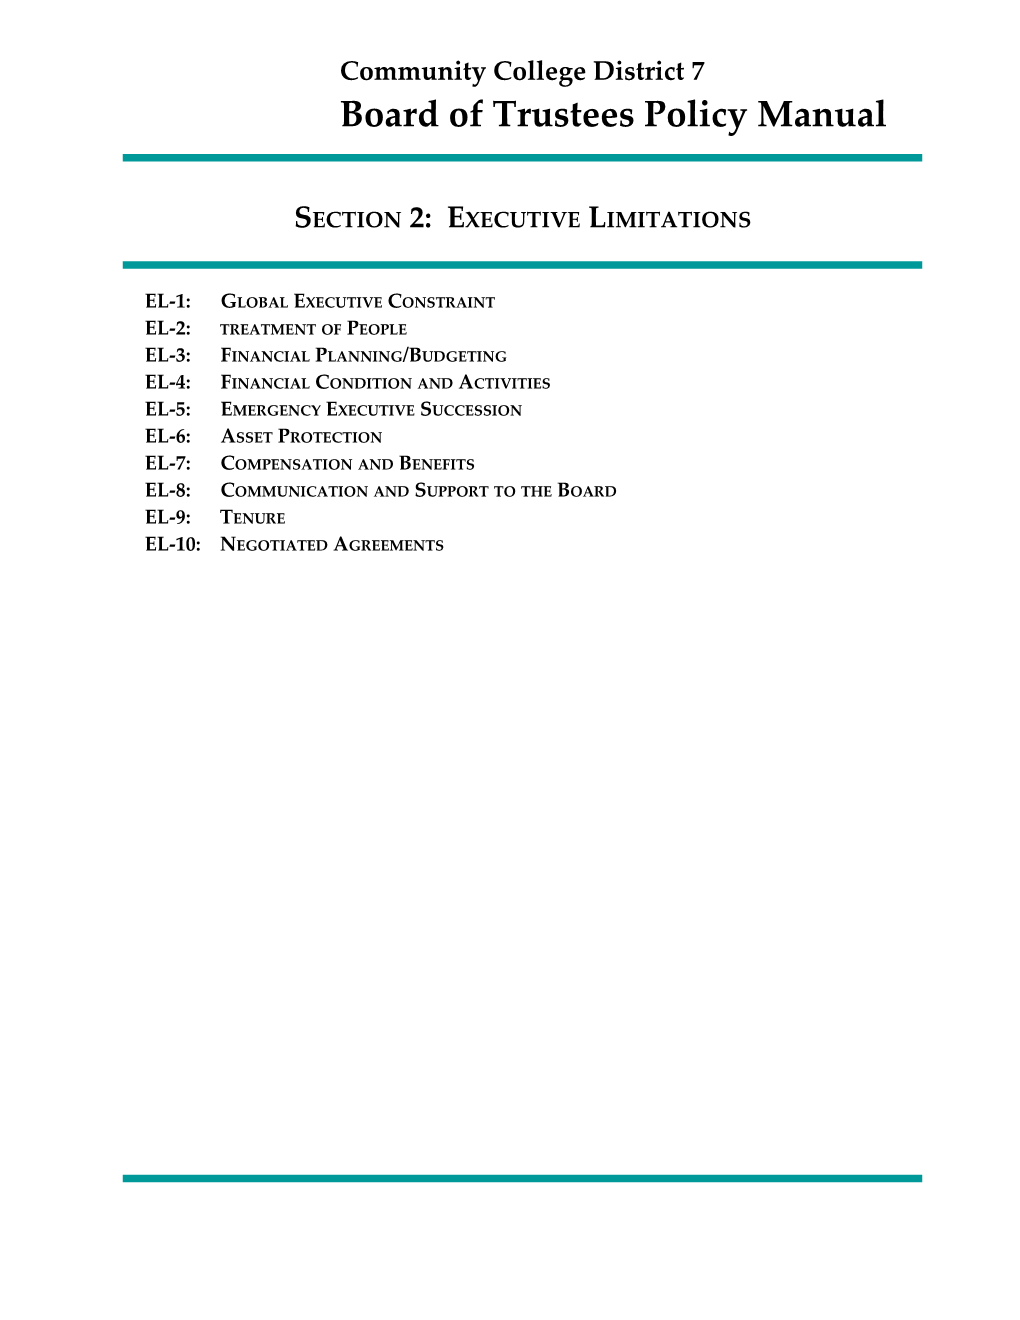 Section 2: Executive Limitations